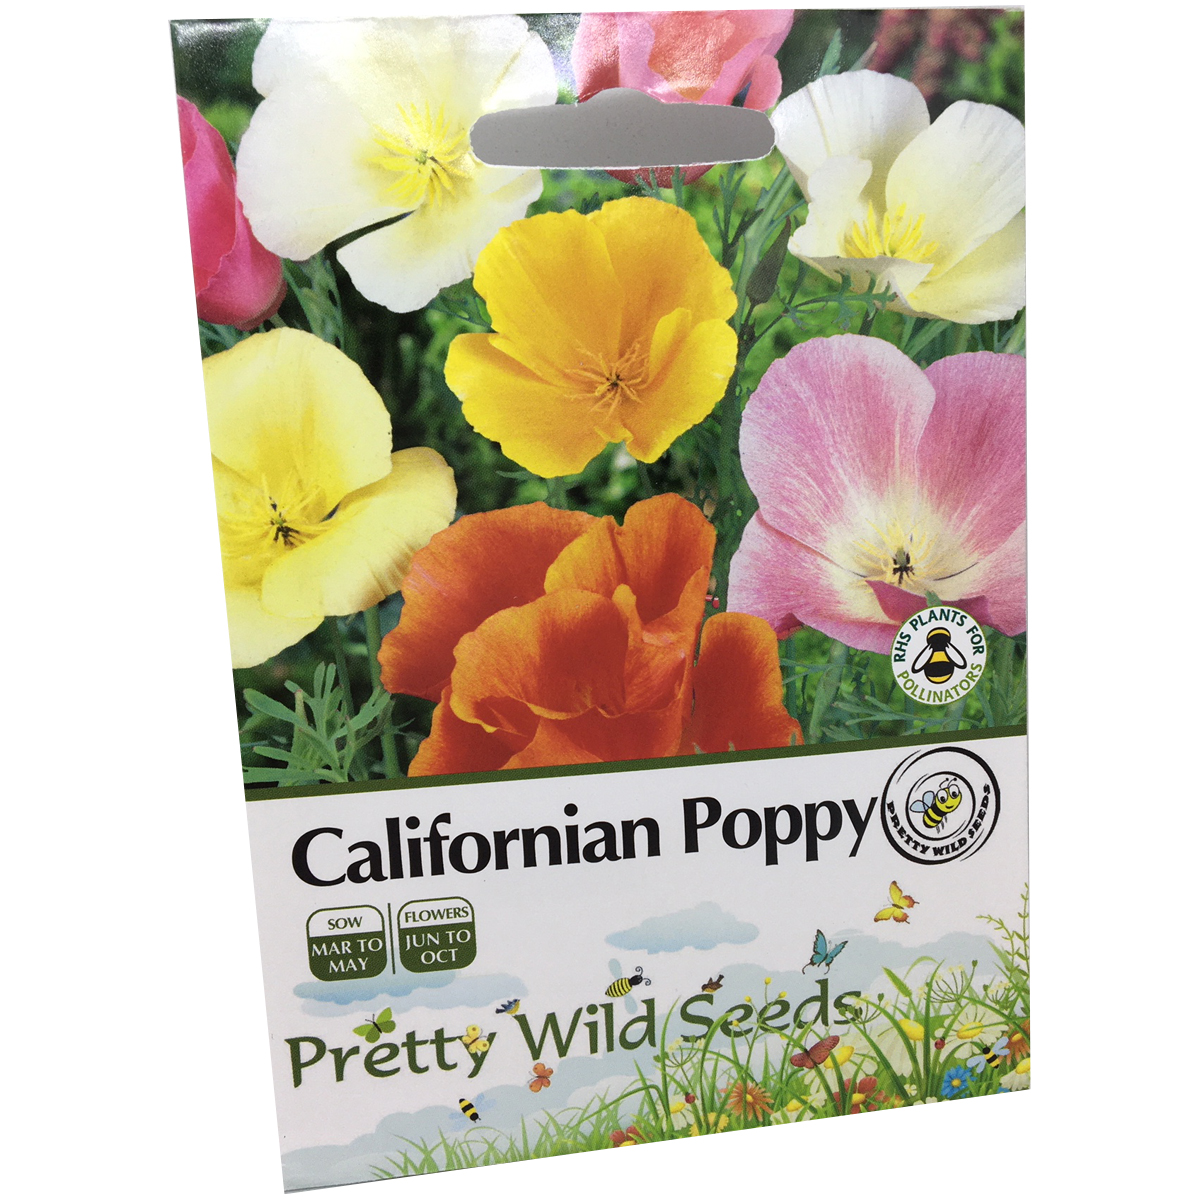 Californian Poppy Mix, just 99p and available through Amazon Prime here; 

amazon.co.uk/dp/B06WP535XH

#savethebees #wildflowers #californianpoppy #gardening #GardenersWorld